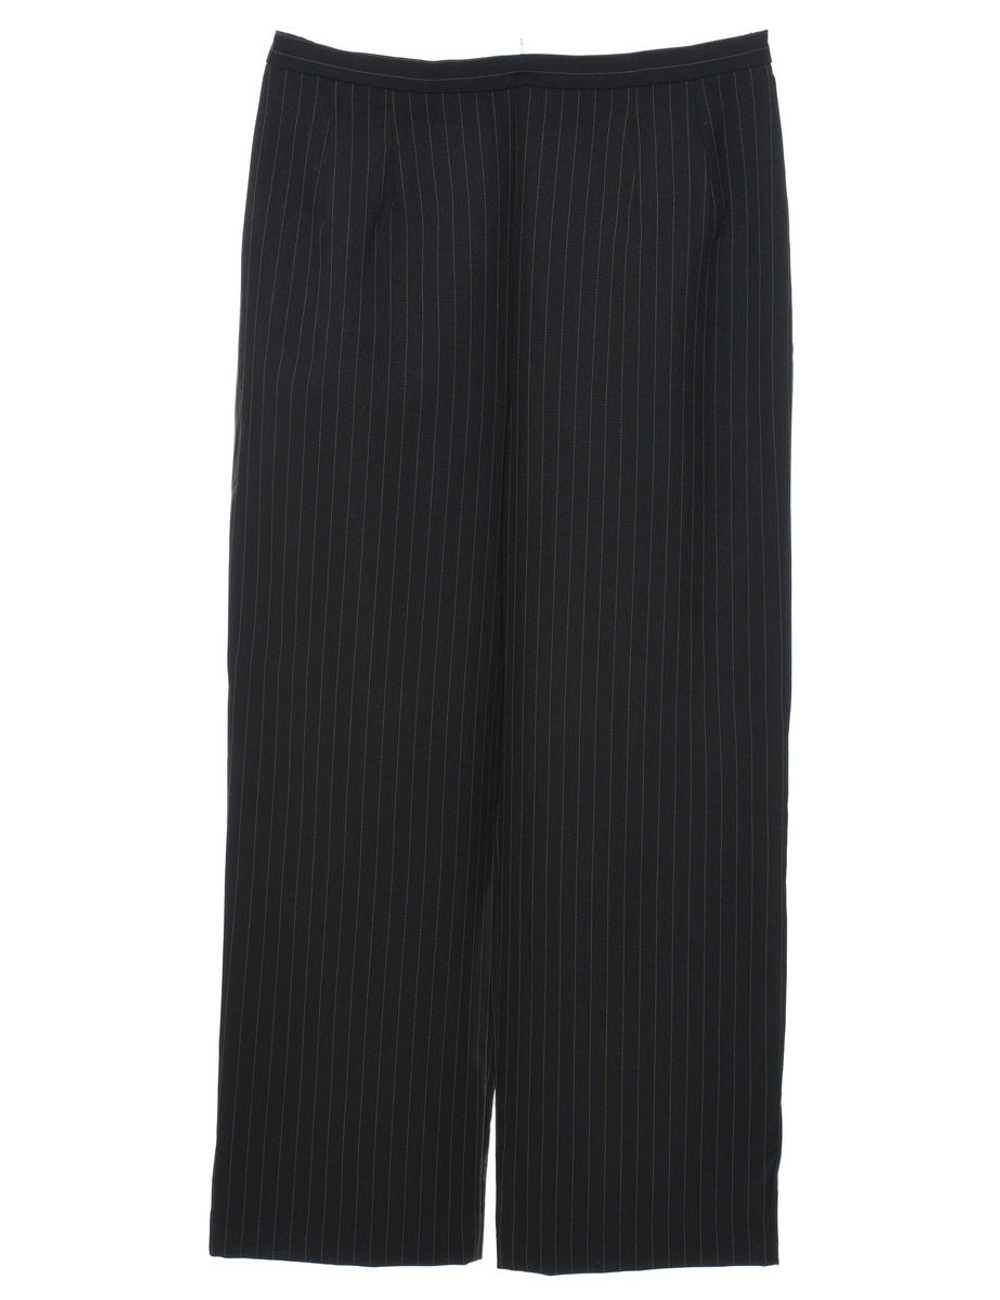 Black Pinstriped Trousers - W30 L27 - image 1